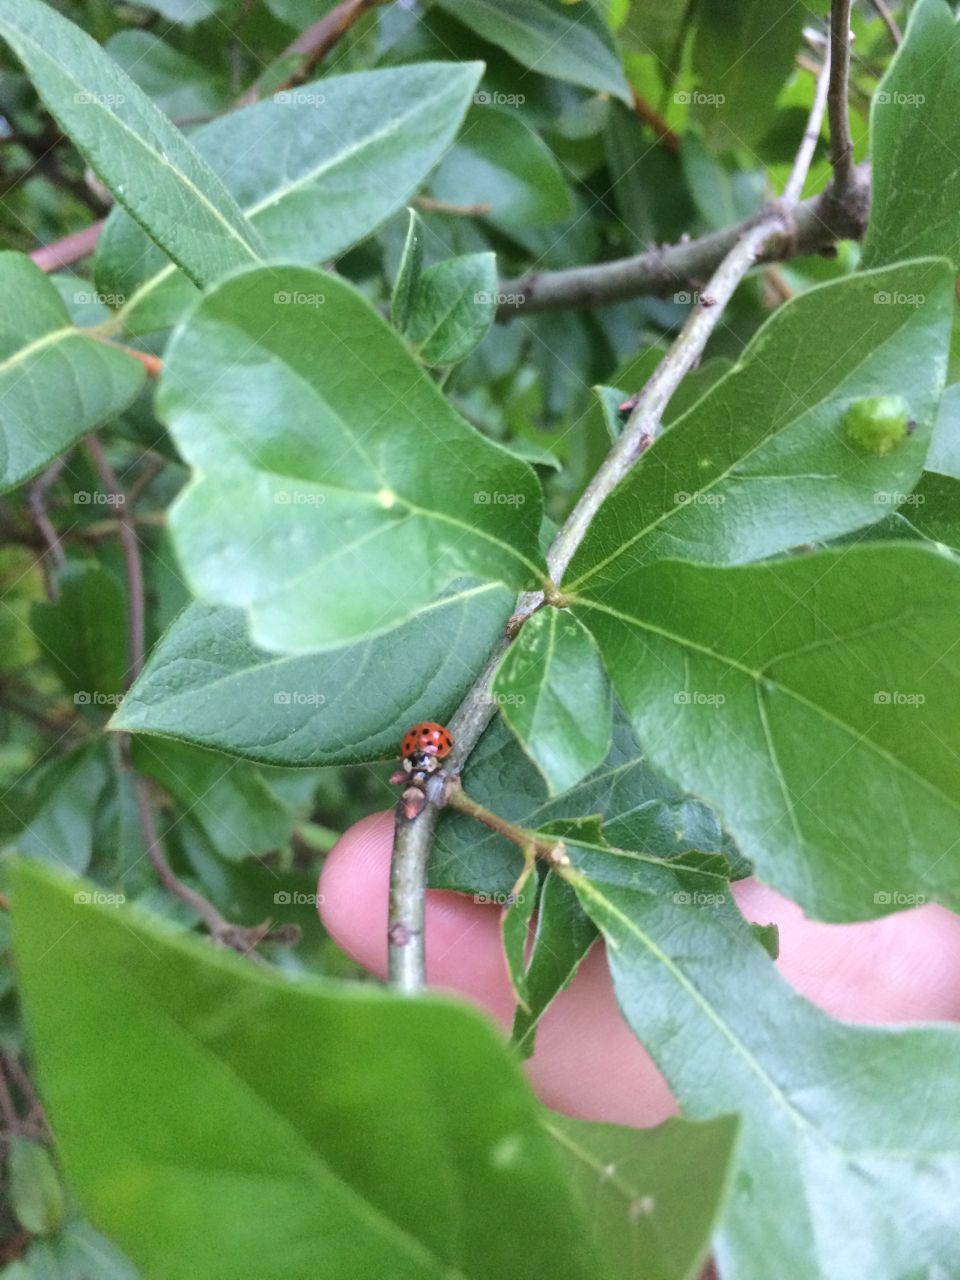 True red Texas ladybug 🐞 